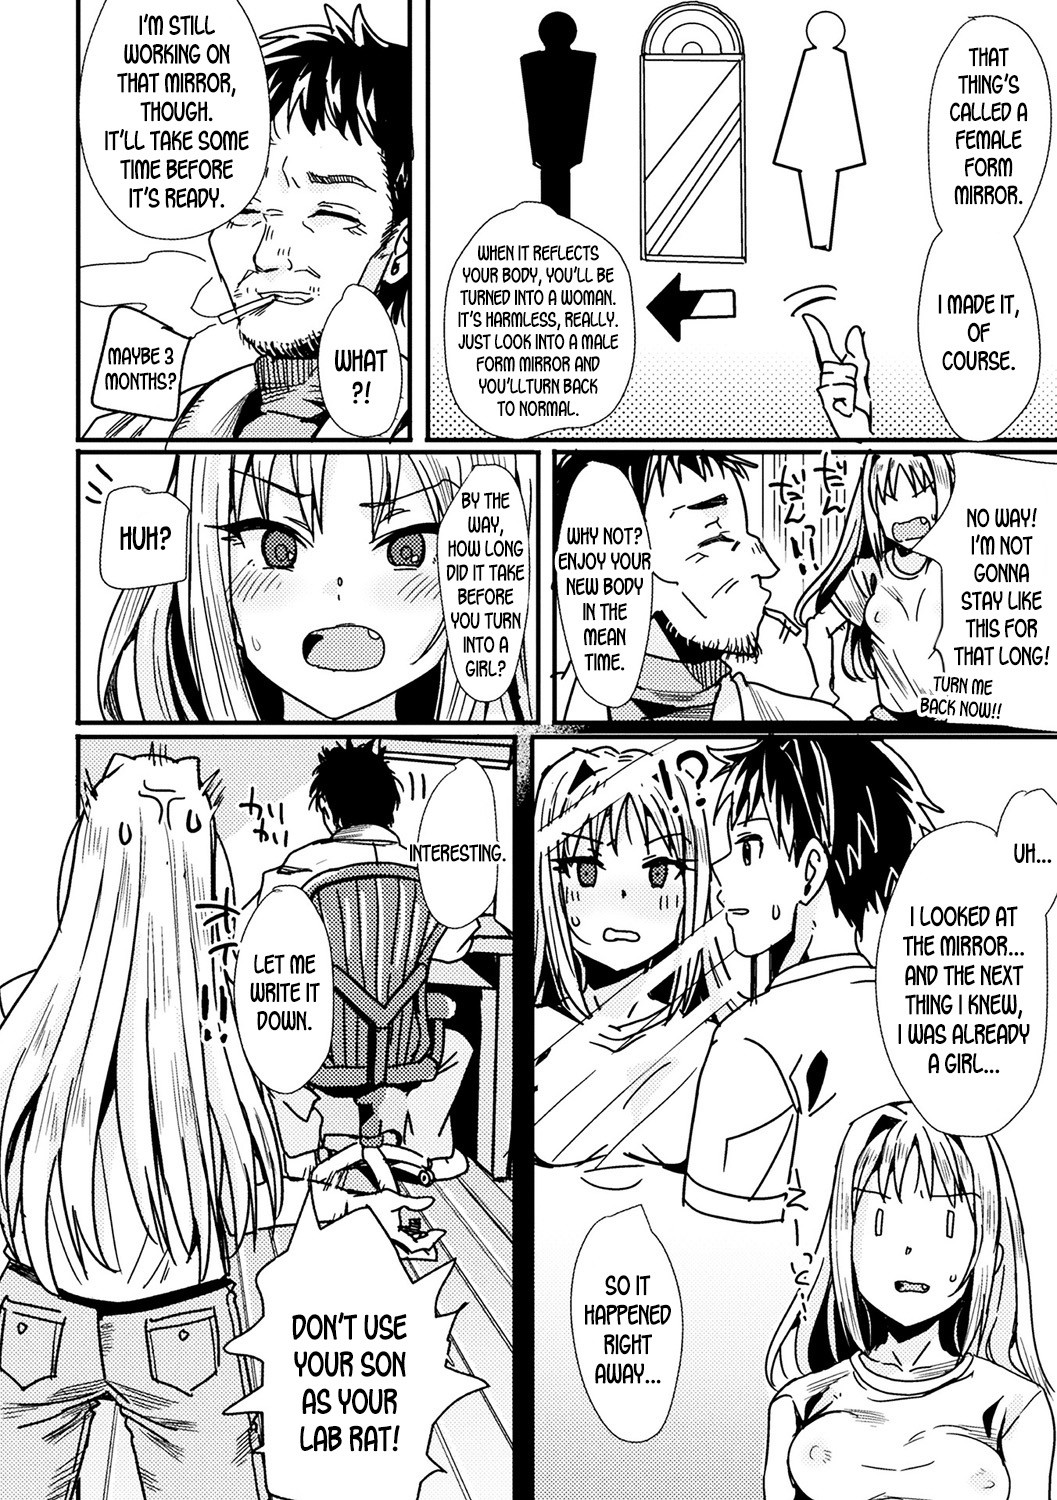 Hentai Manga Comic-Female Form Mirror-Read-2